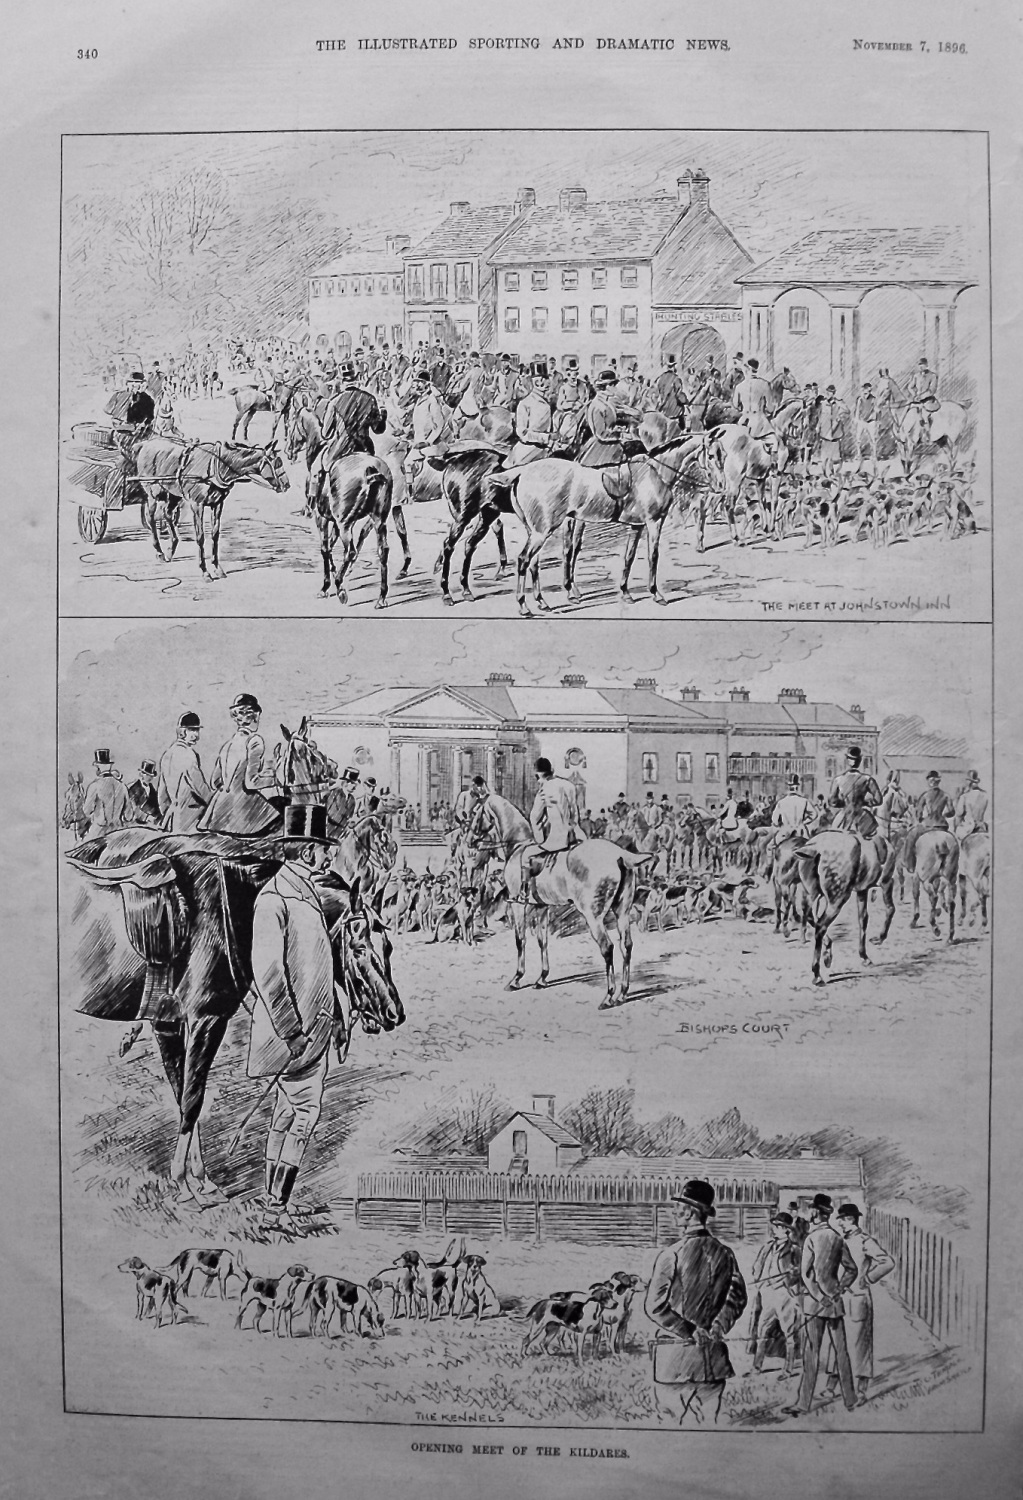 Opening Meet of the Kildares.  1896.